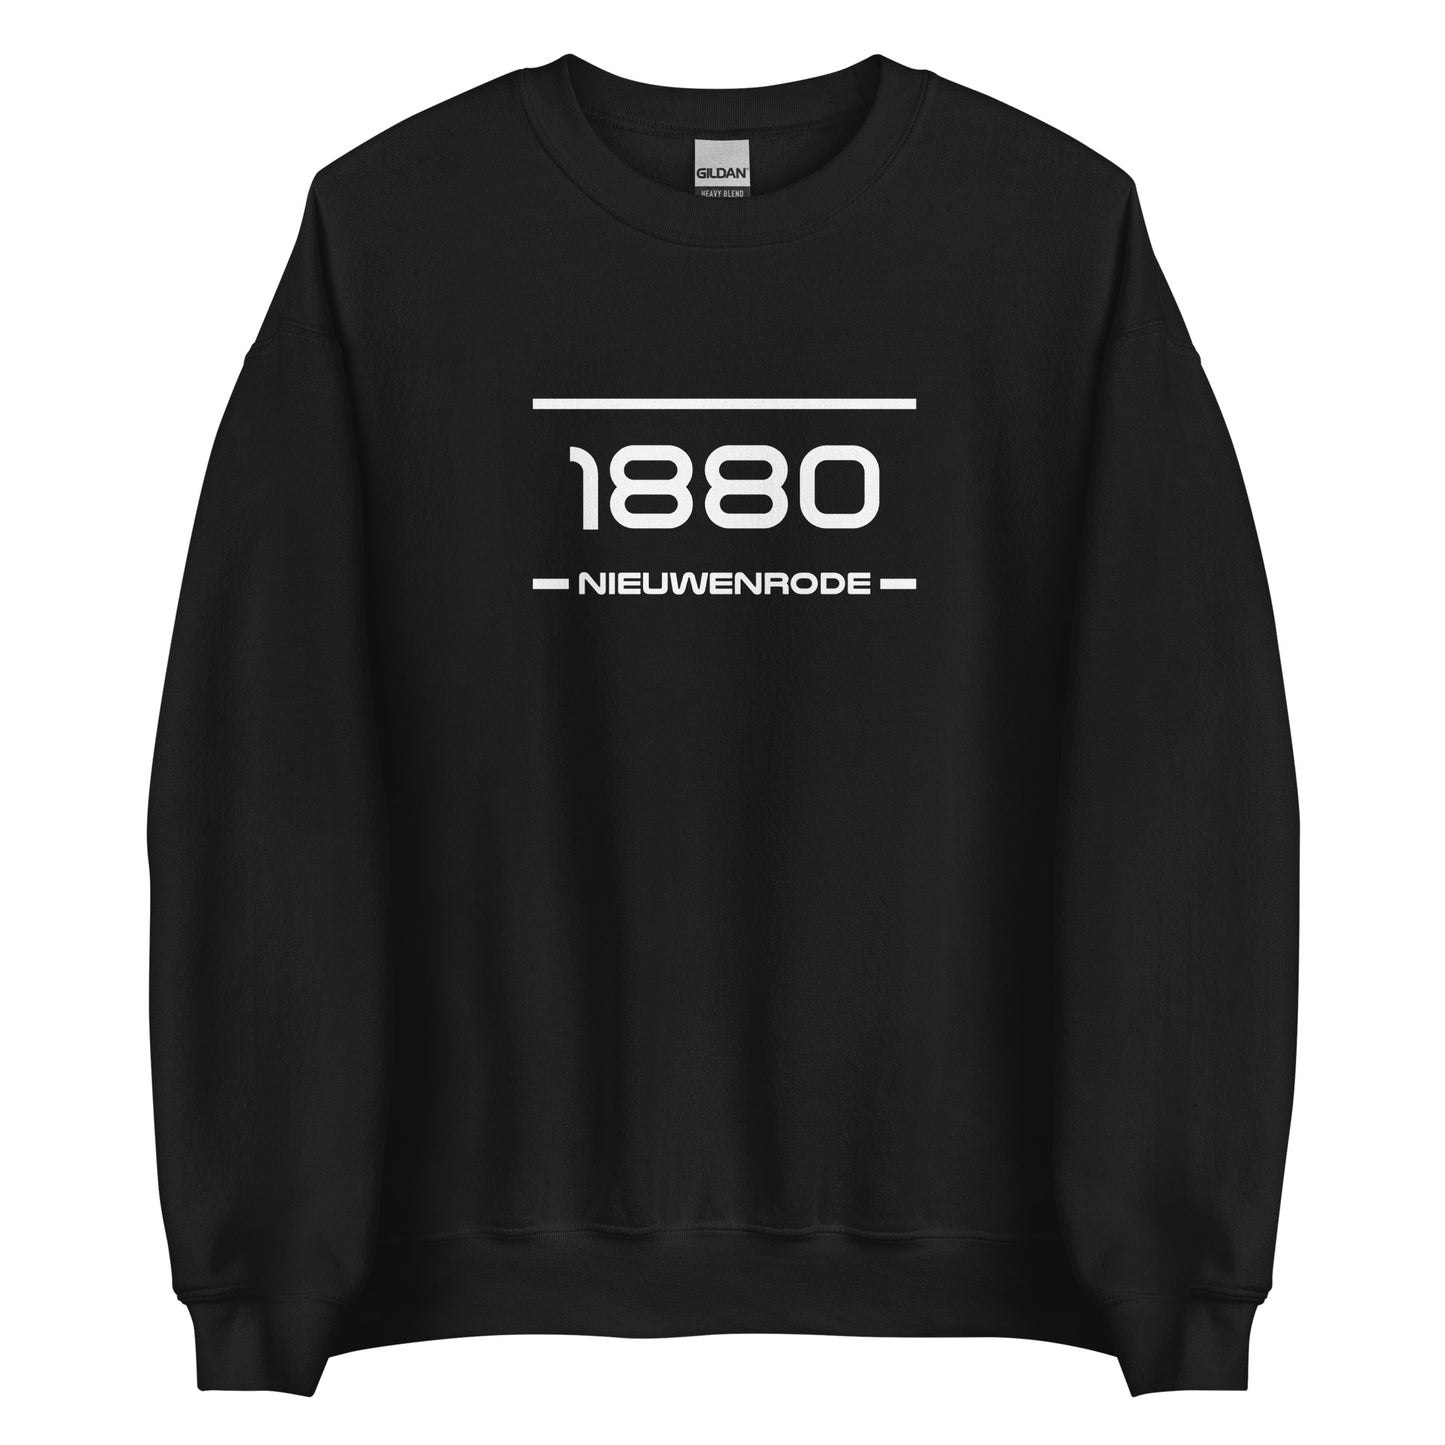 Sweater - 1880 - Nieuwenrode (M/V)